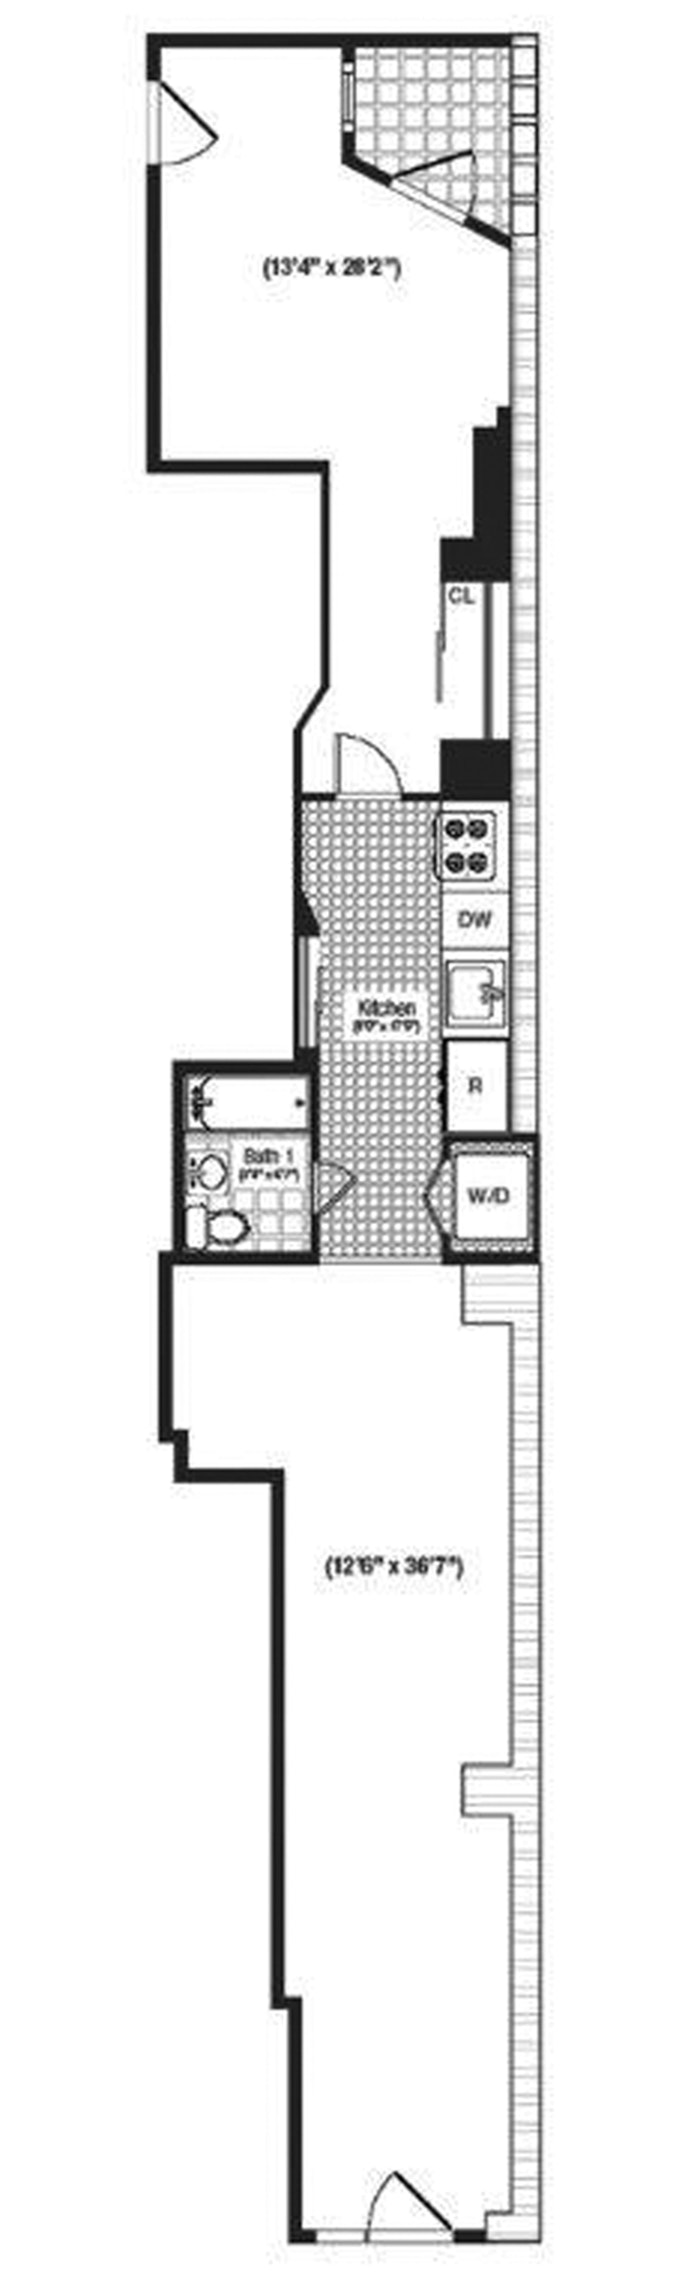 Floorplan for 36 Laight Street, 1A